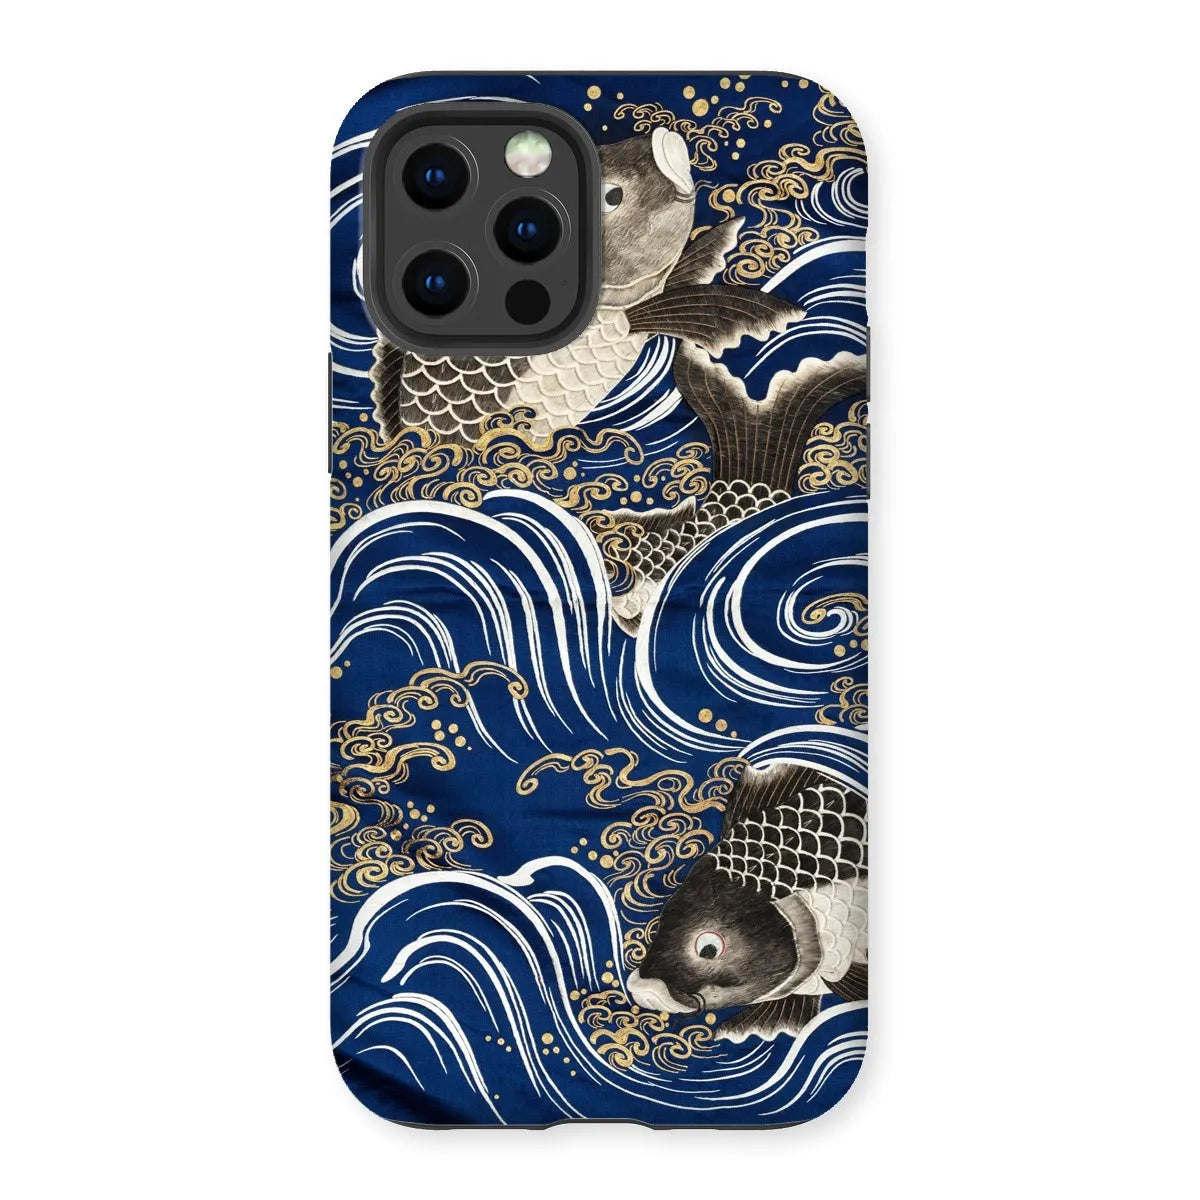 Fukusa And Carp - Japanese Meiji Period Art Phone Case - Iphone 12 Pro / Matte - Mobile Phone Cases - Aesthetic Art